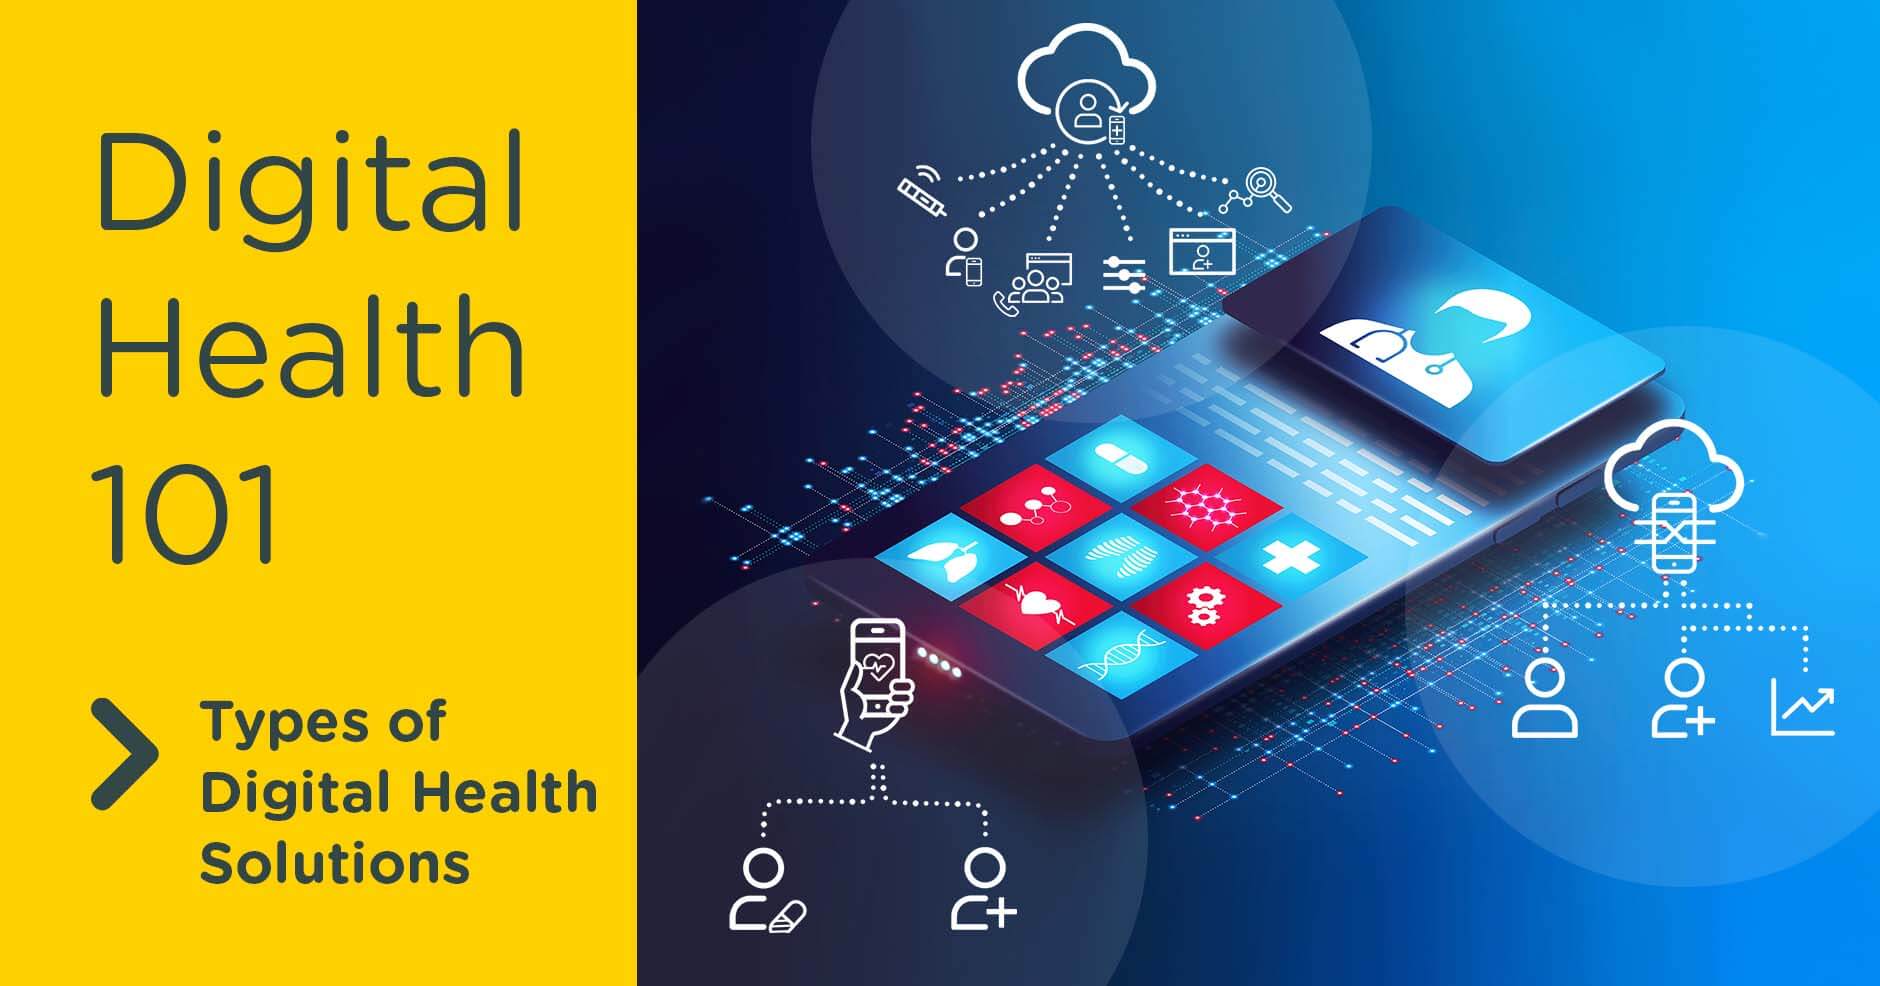 Digital Health 101: Types of Digital Health Solutions